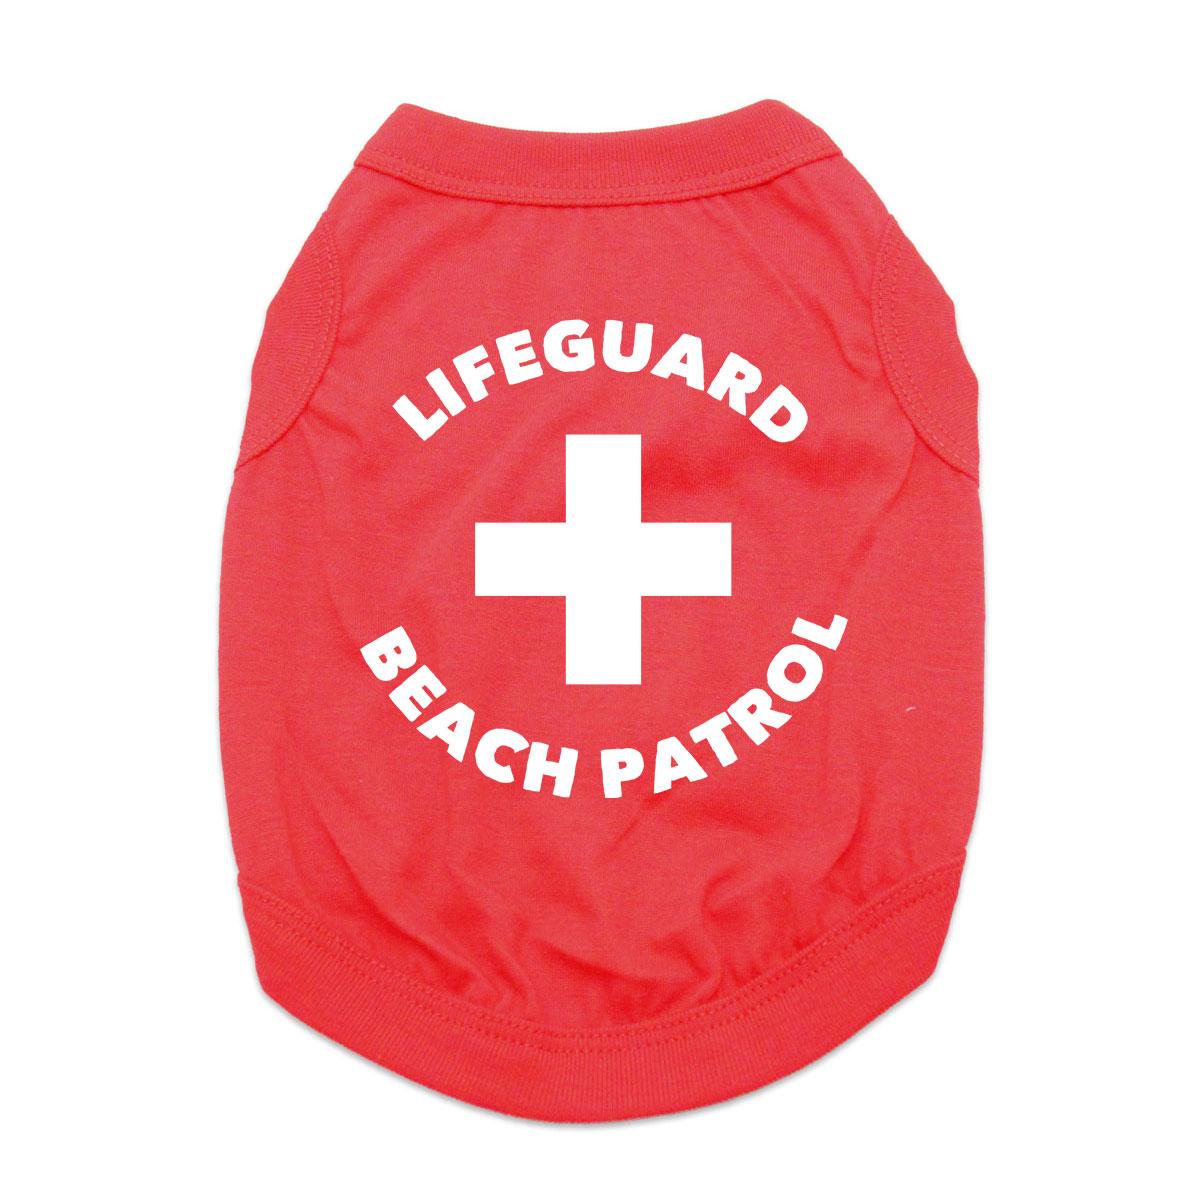 Lifeguard Beach Patrol Dog Shirt - Red